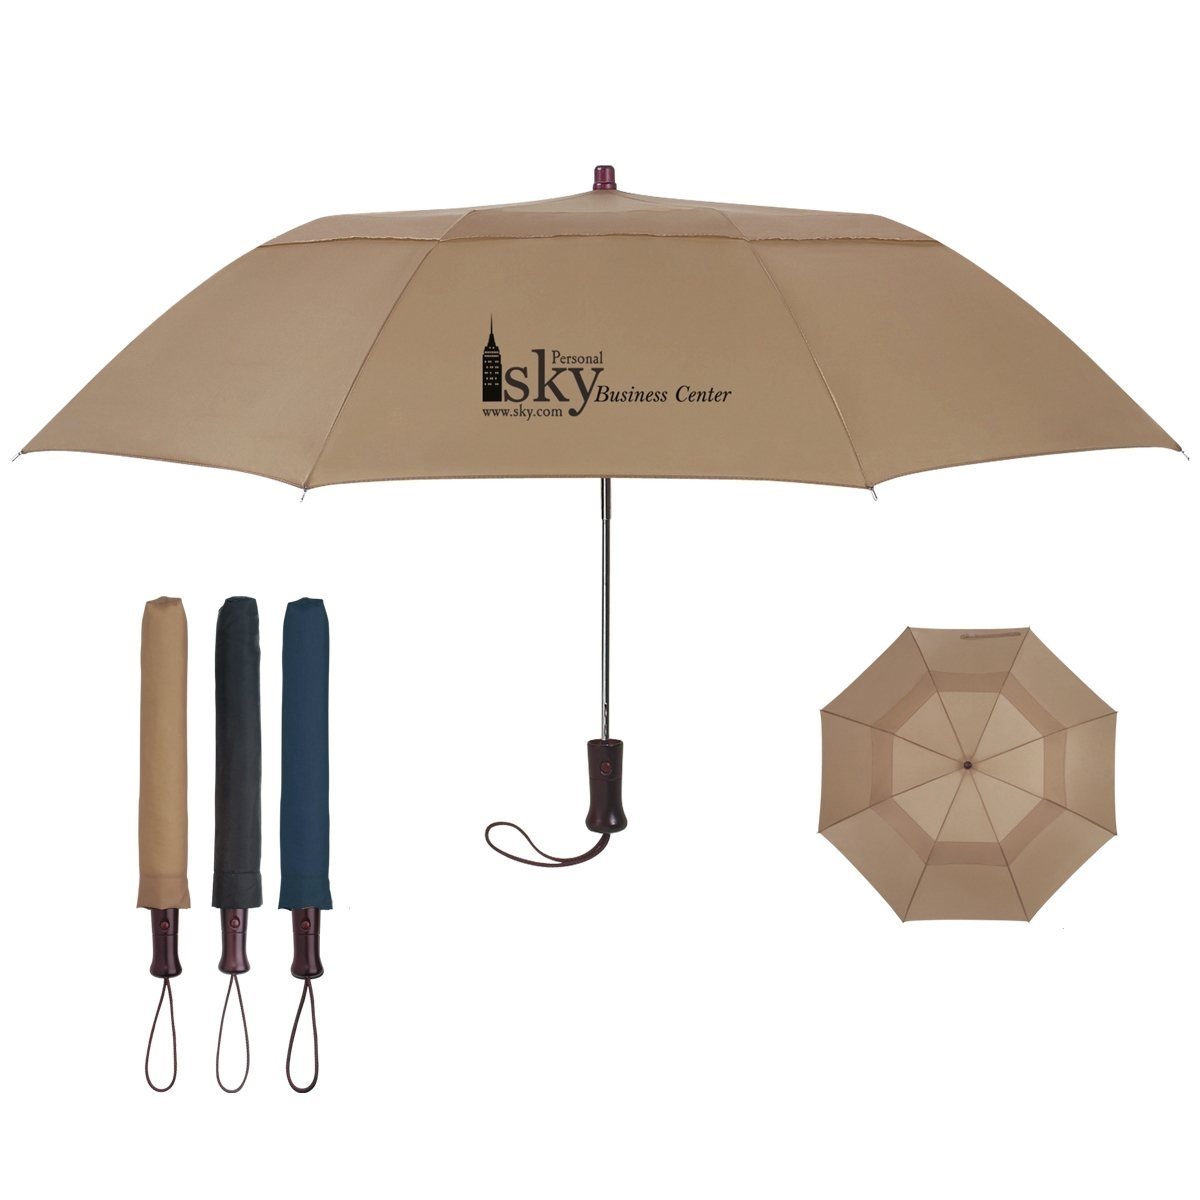 Are umbrellas eco-friendly?